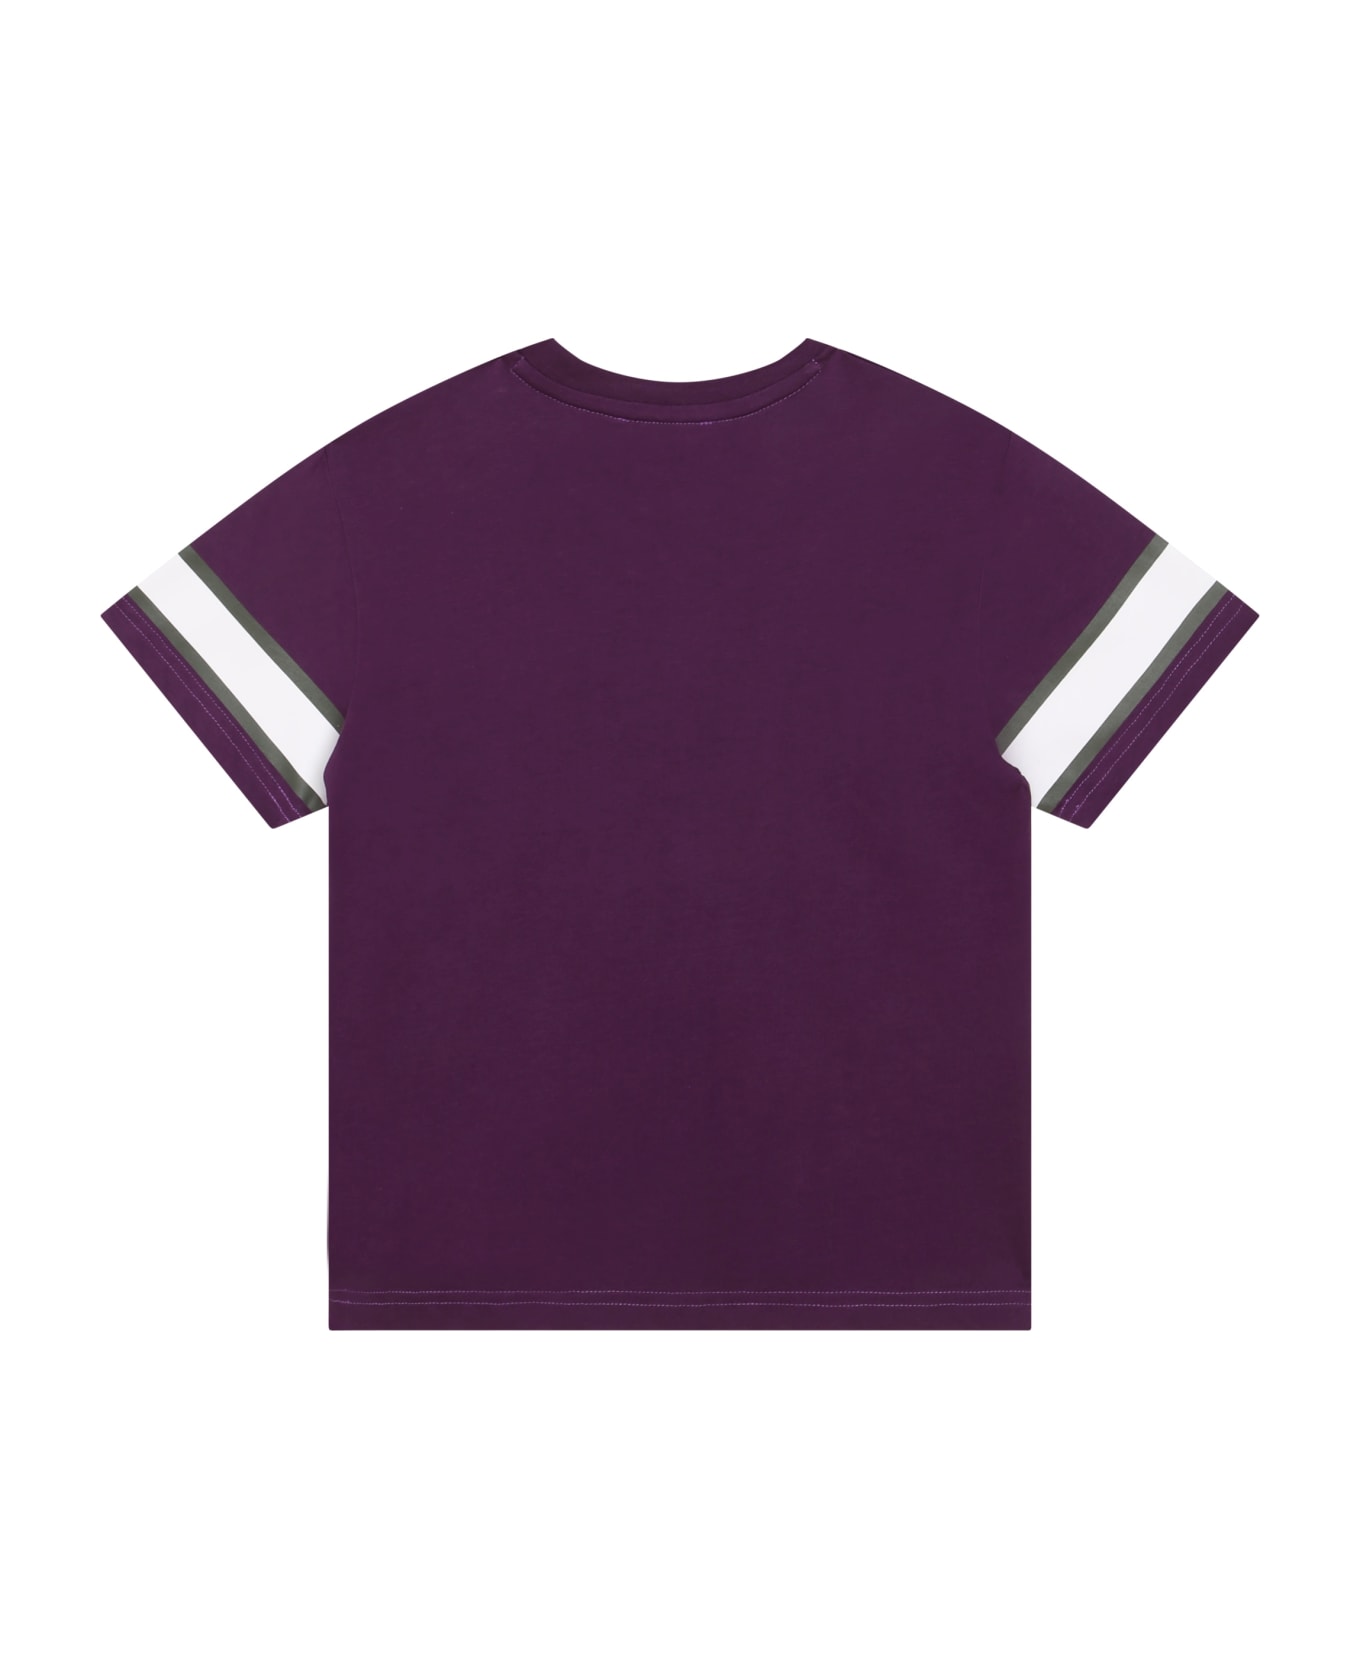 DKNY Logo T-shirt - Violet Tシャツ＆ポロシャツ